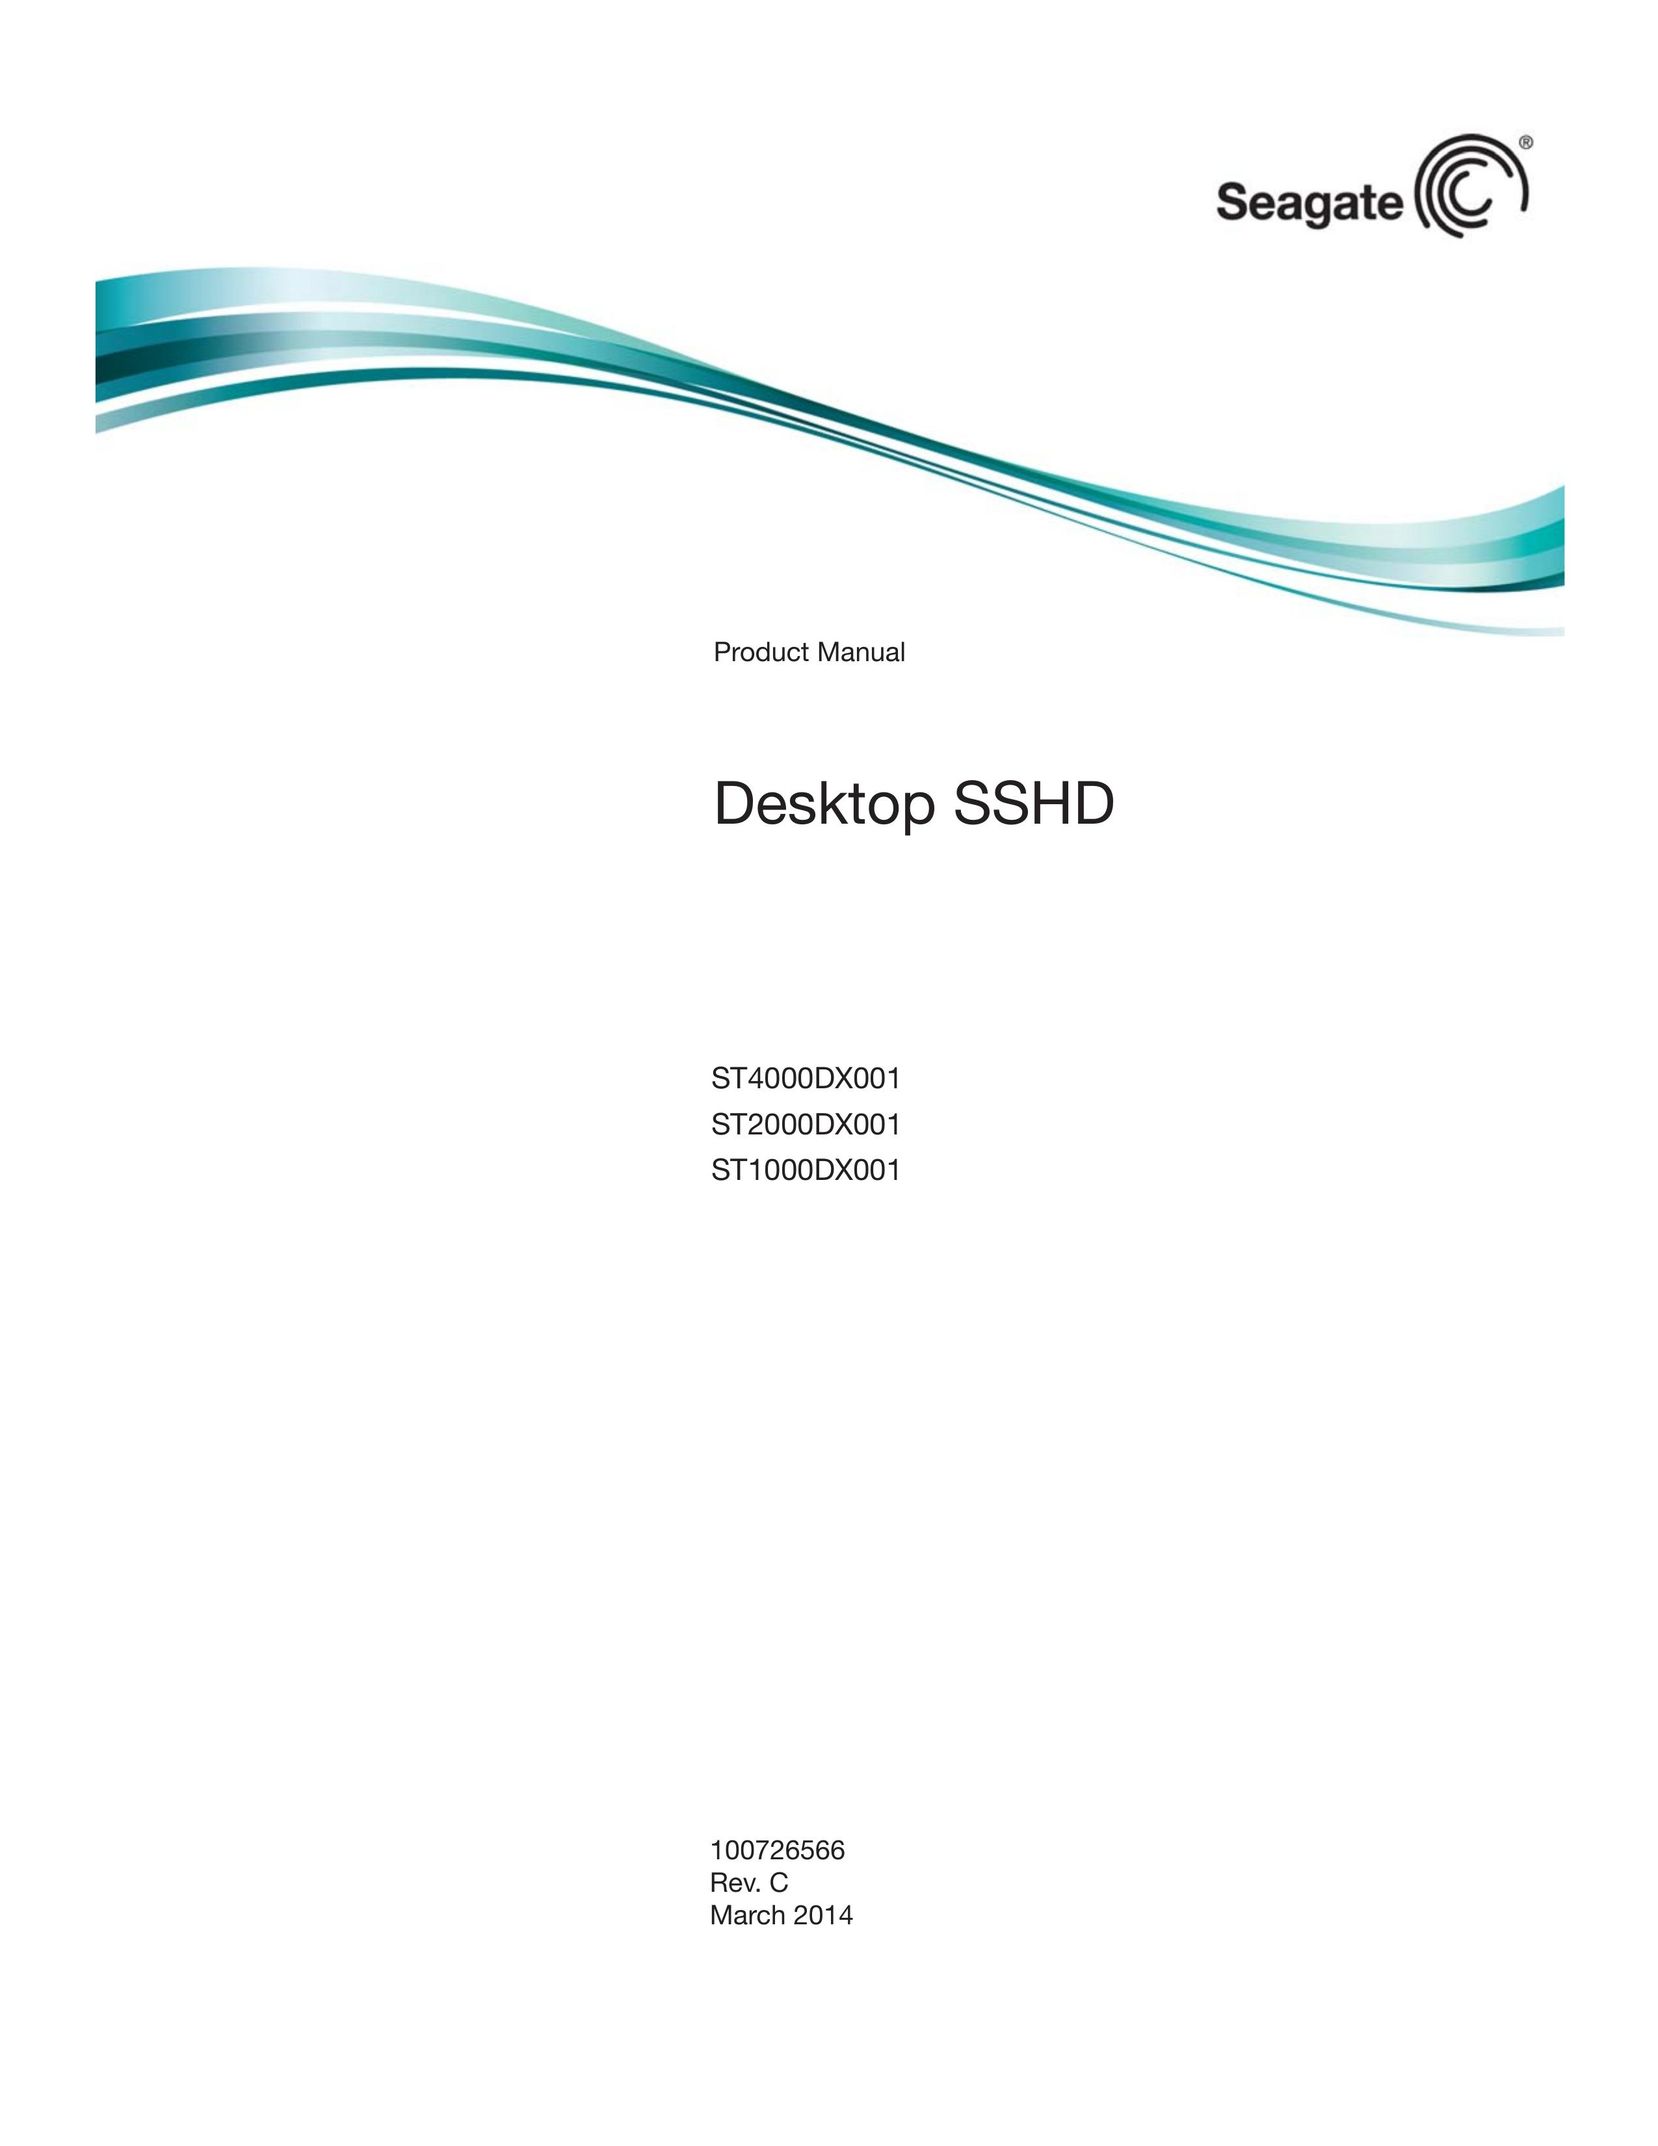 Seagate ST1000DX001 Laptop User Manual